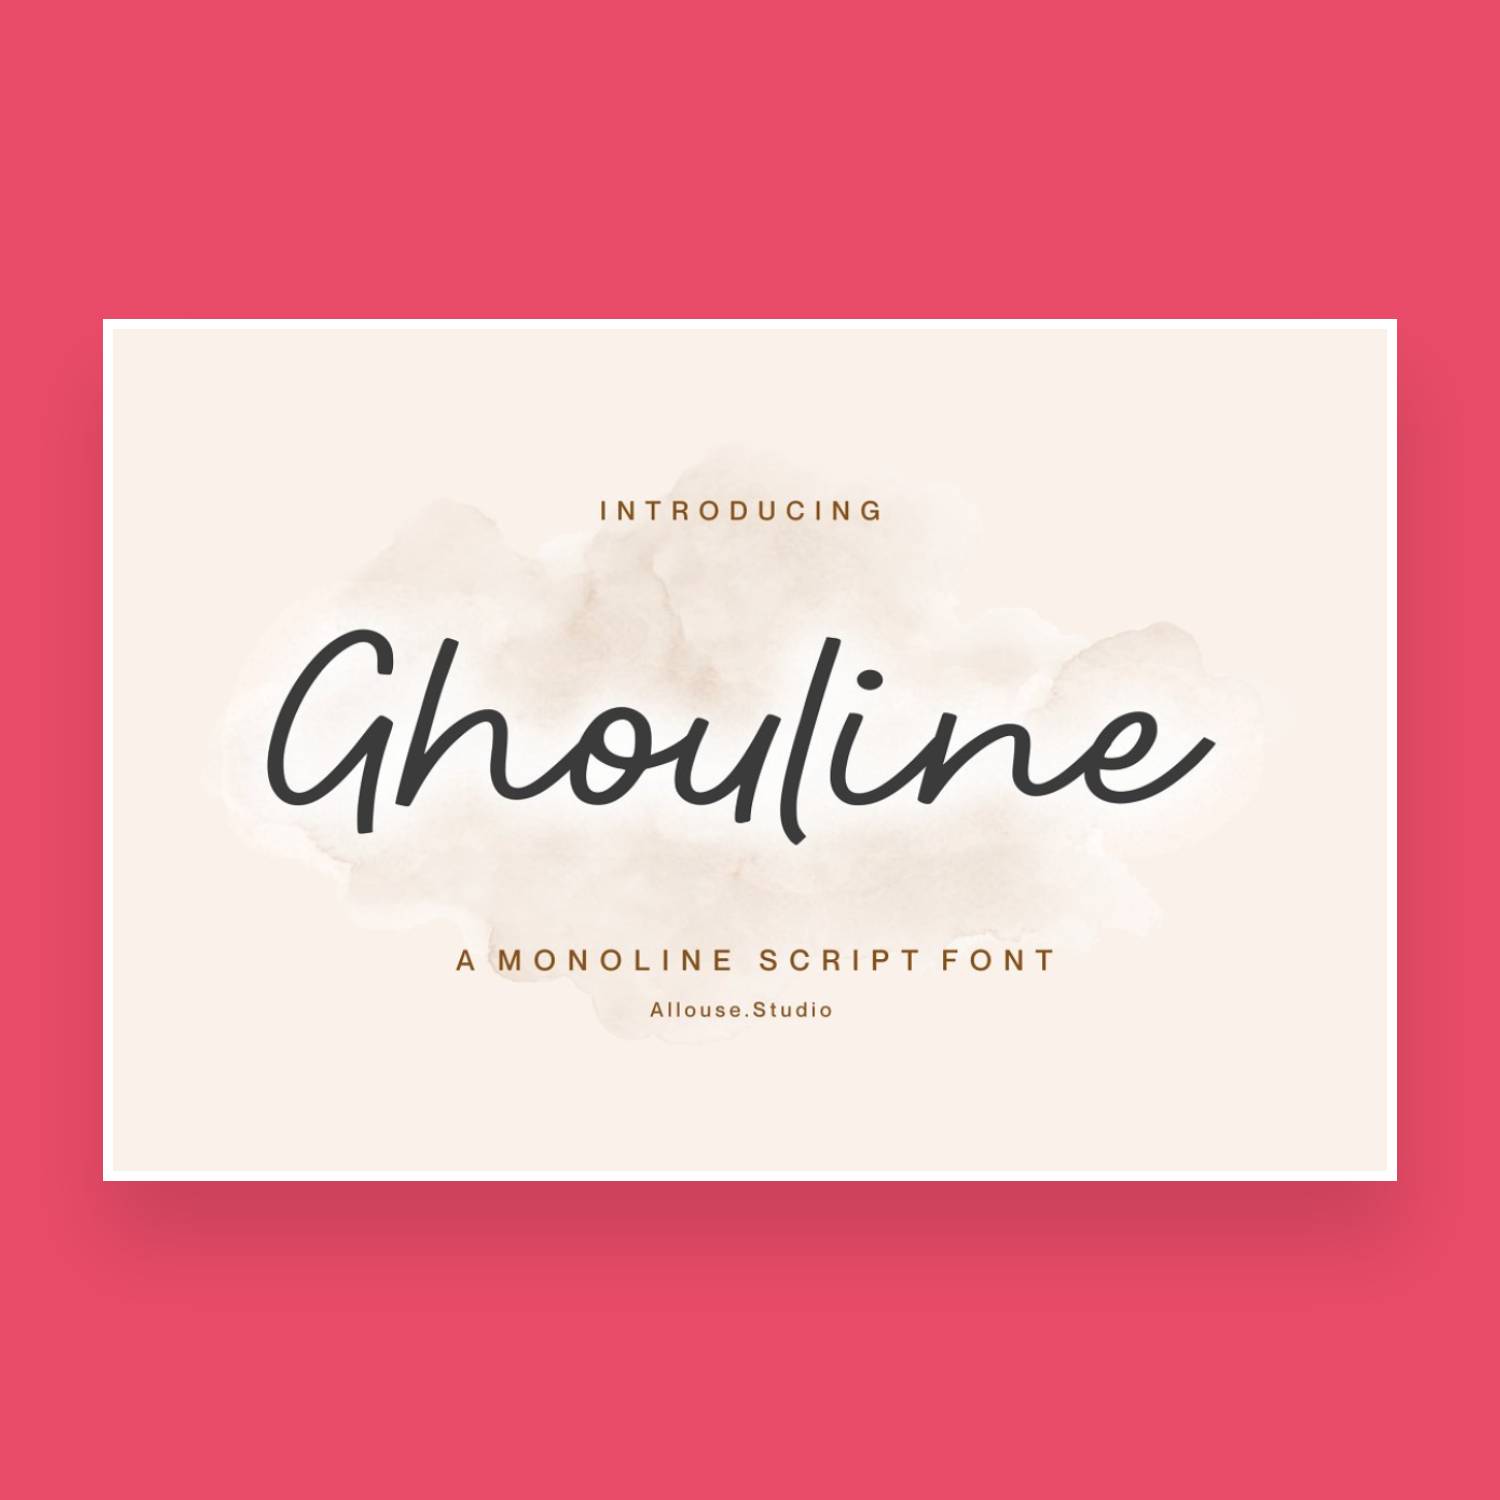 Ghouline a monoline script font main cover.